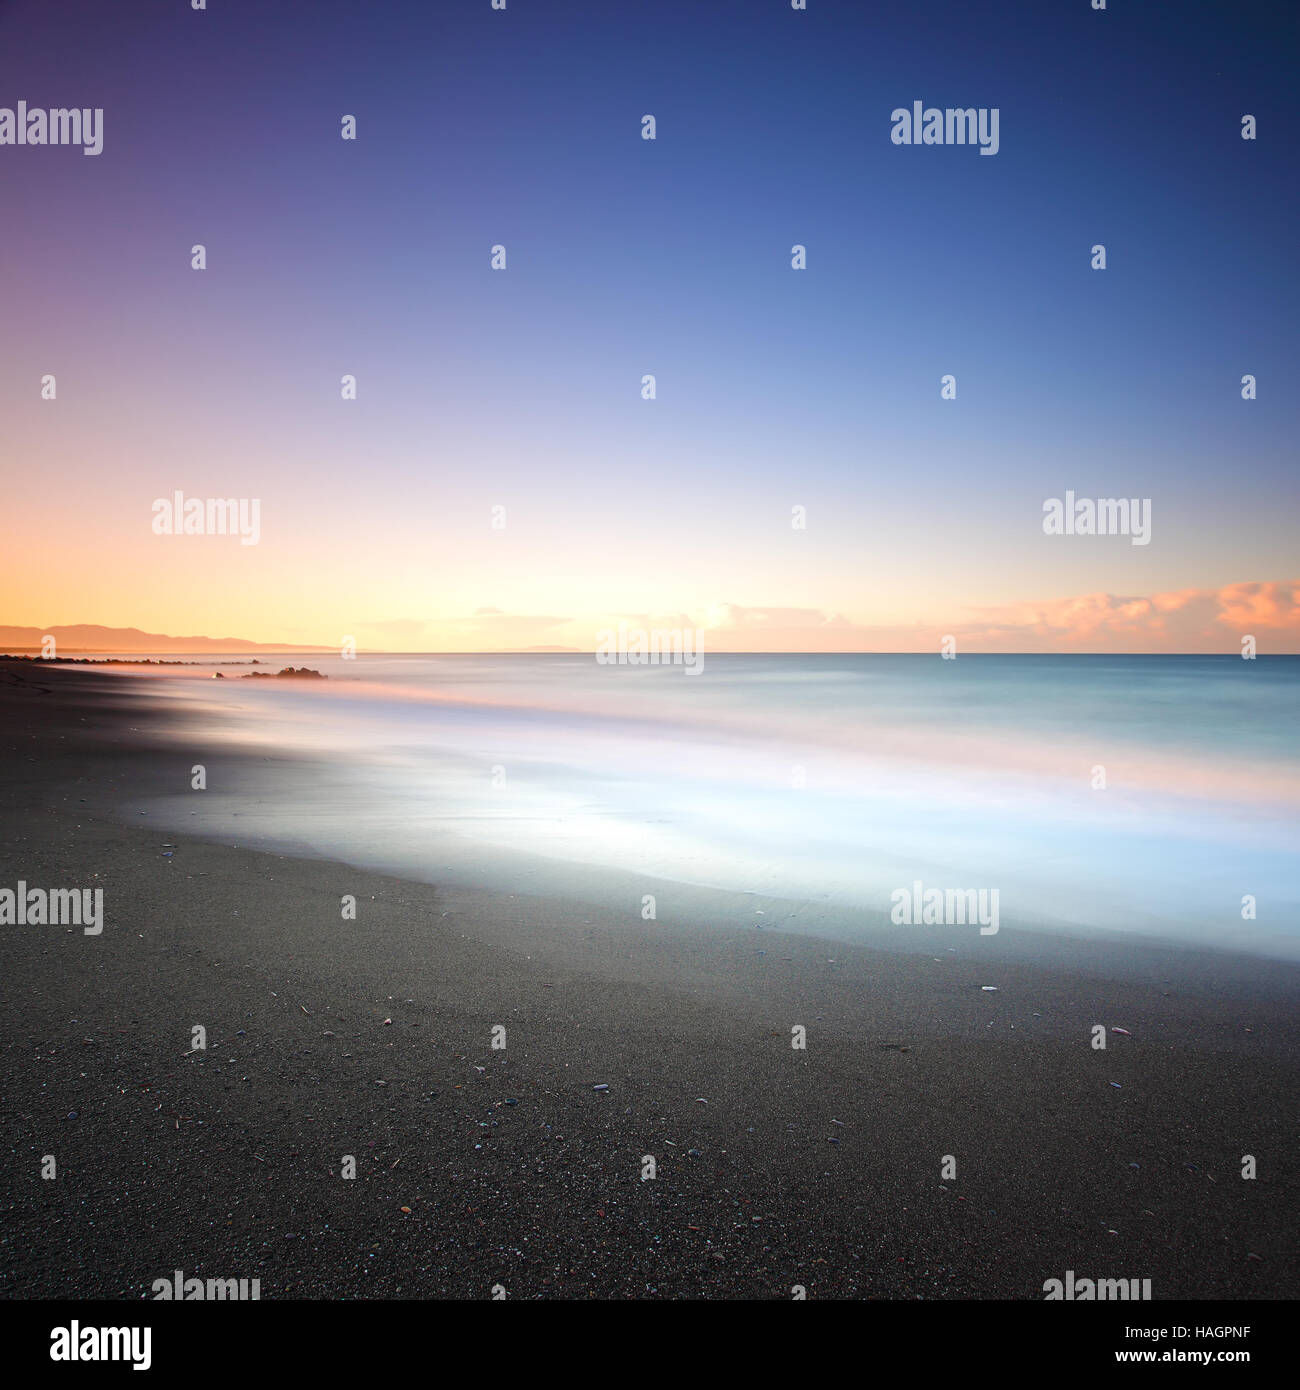 Dunklen Sandstrand und das Meer am Morgen. Toskana Italien. Langzeitbelichtung Fotografie. Stockfoto